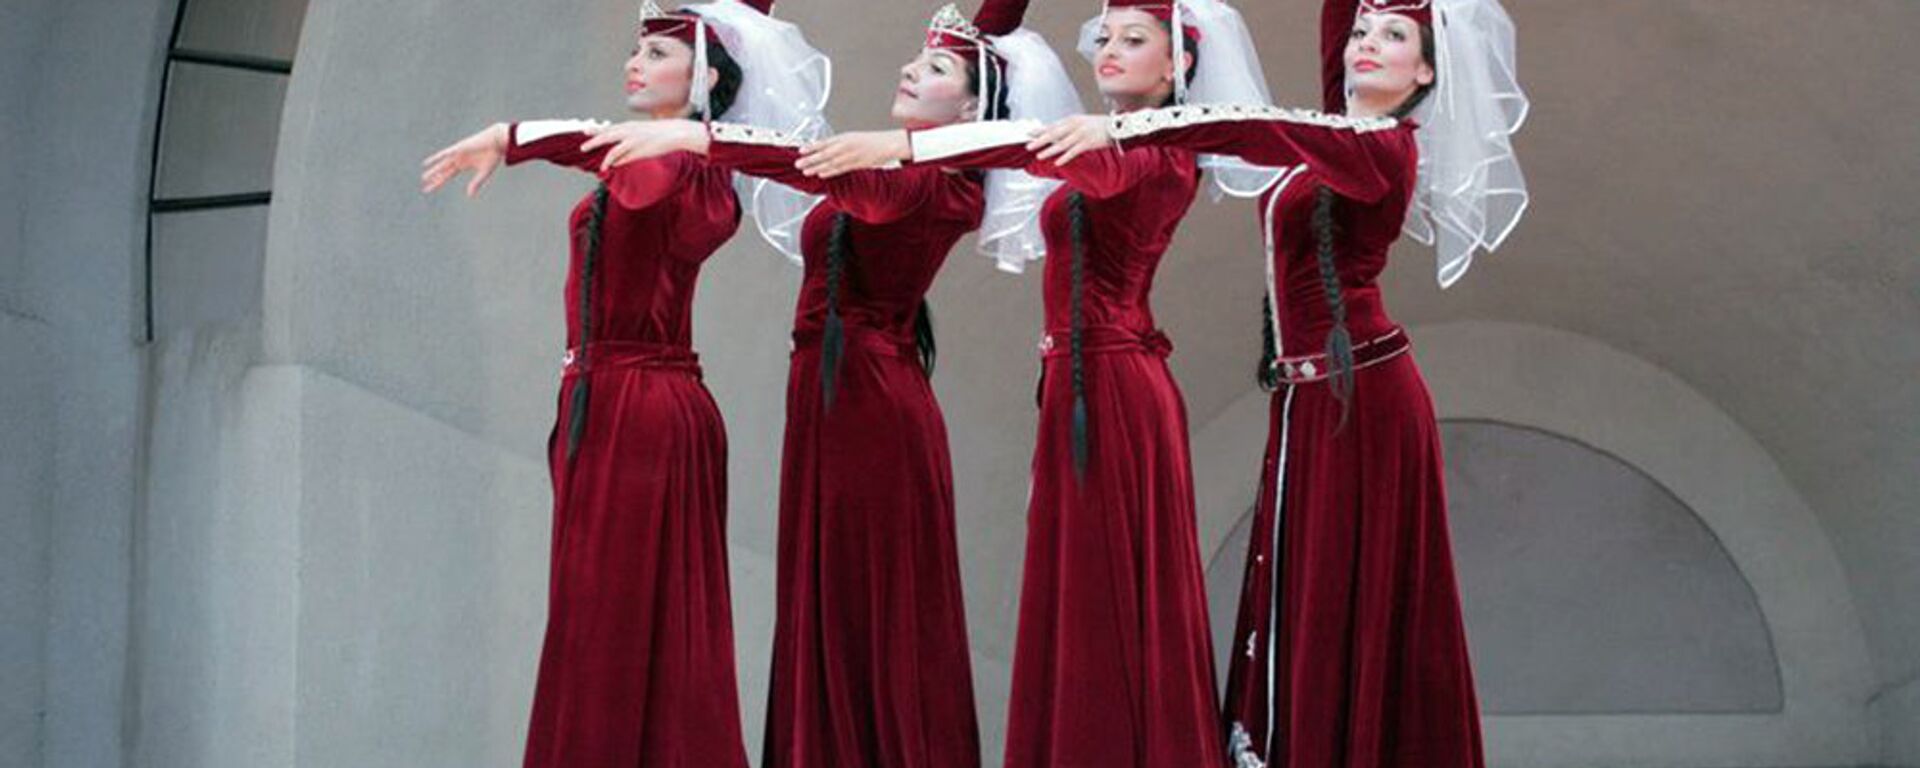 Армянские танцы. Узундара - Sputnik Армения, 1920, 30.12.2020